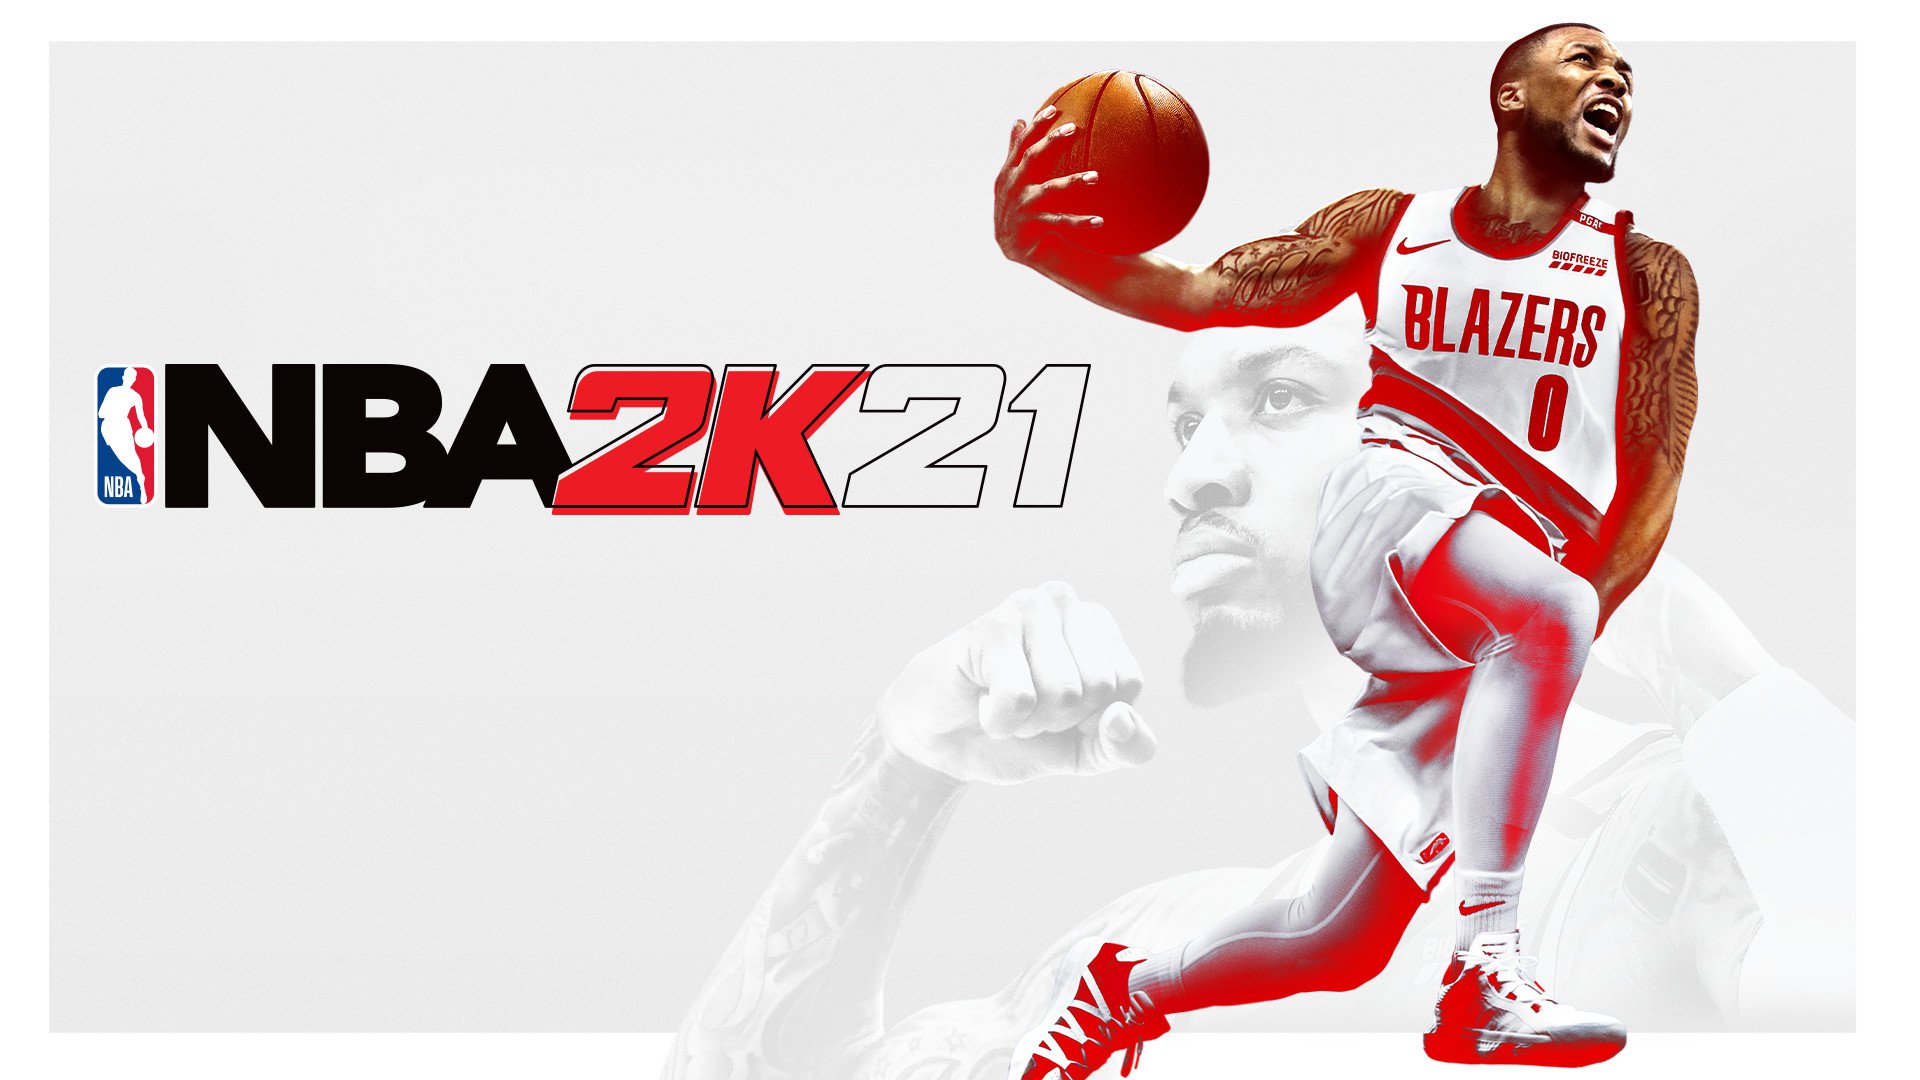 NBA 2K21 [Steam]